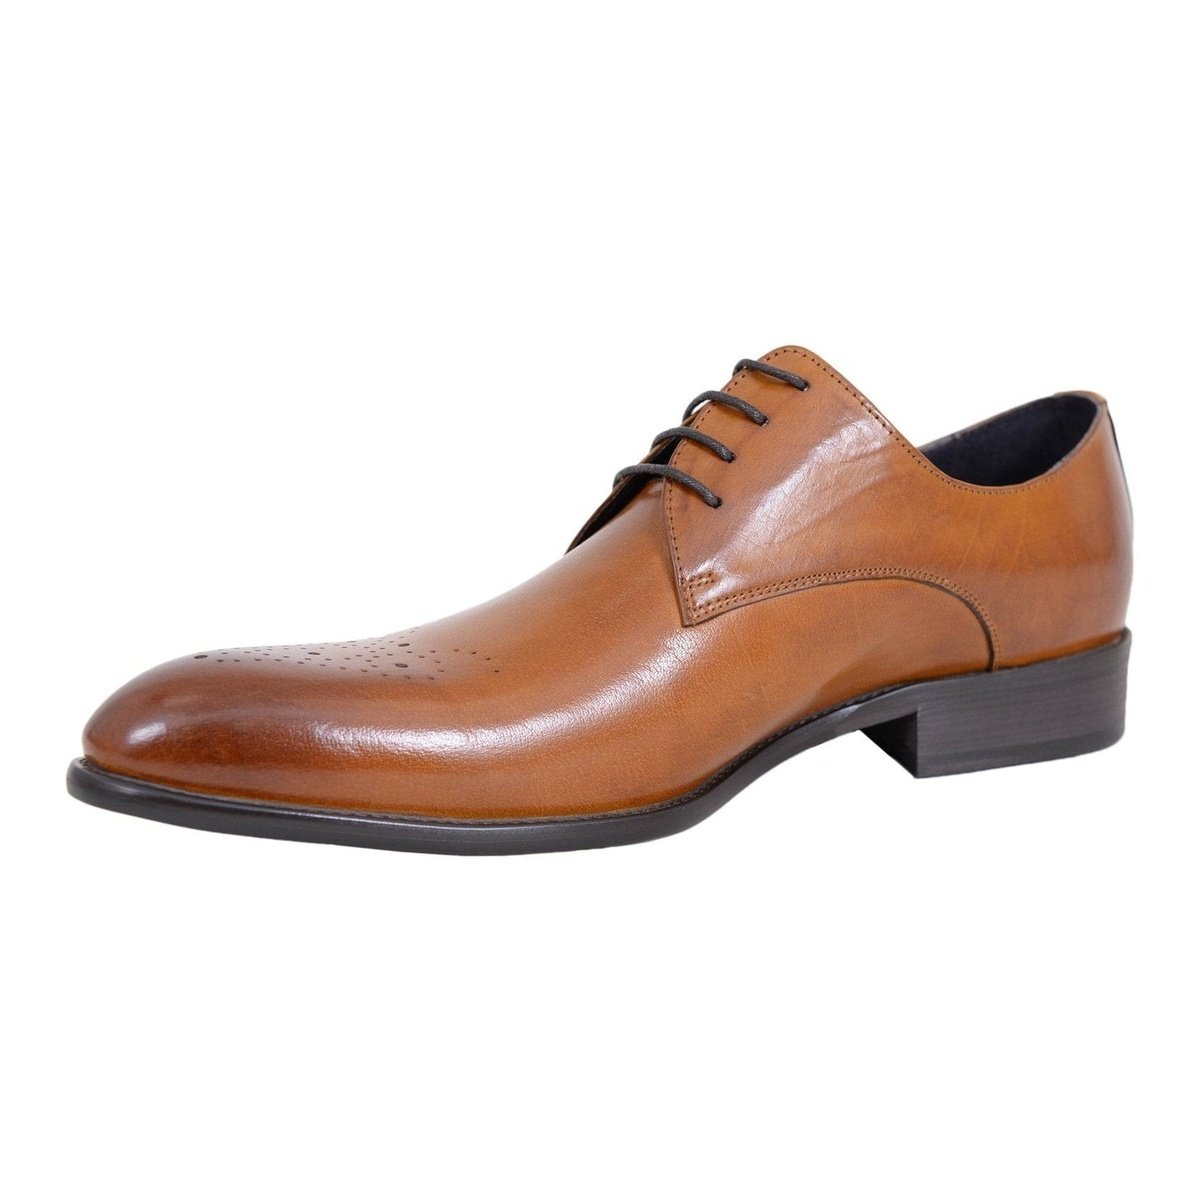 Carrucci Shoes For Amazon Carrucci Men's Genuine Leather Cognac Brown Lace Up Oxford Brogues Dress Shoes